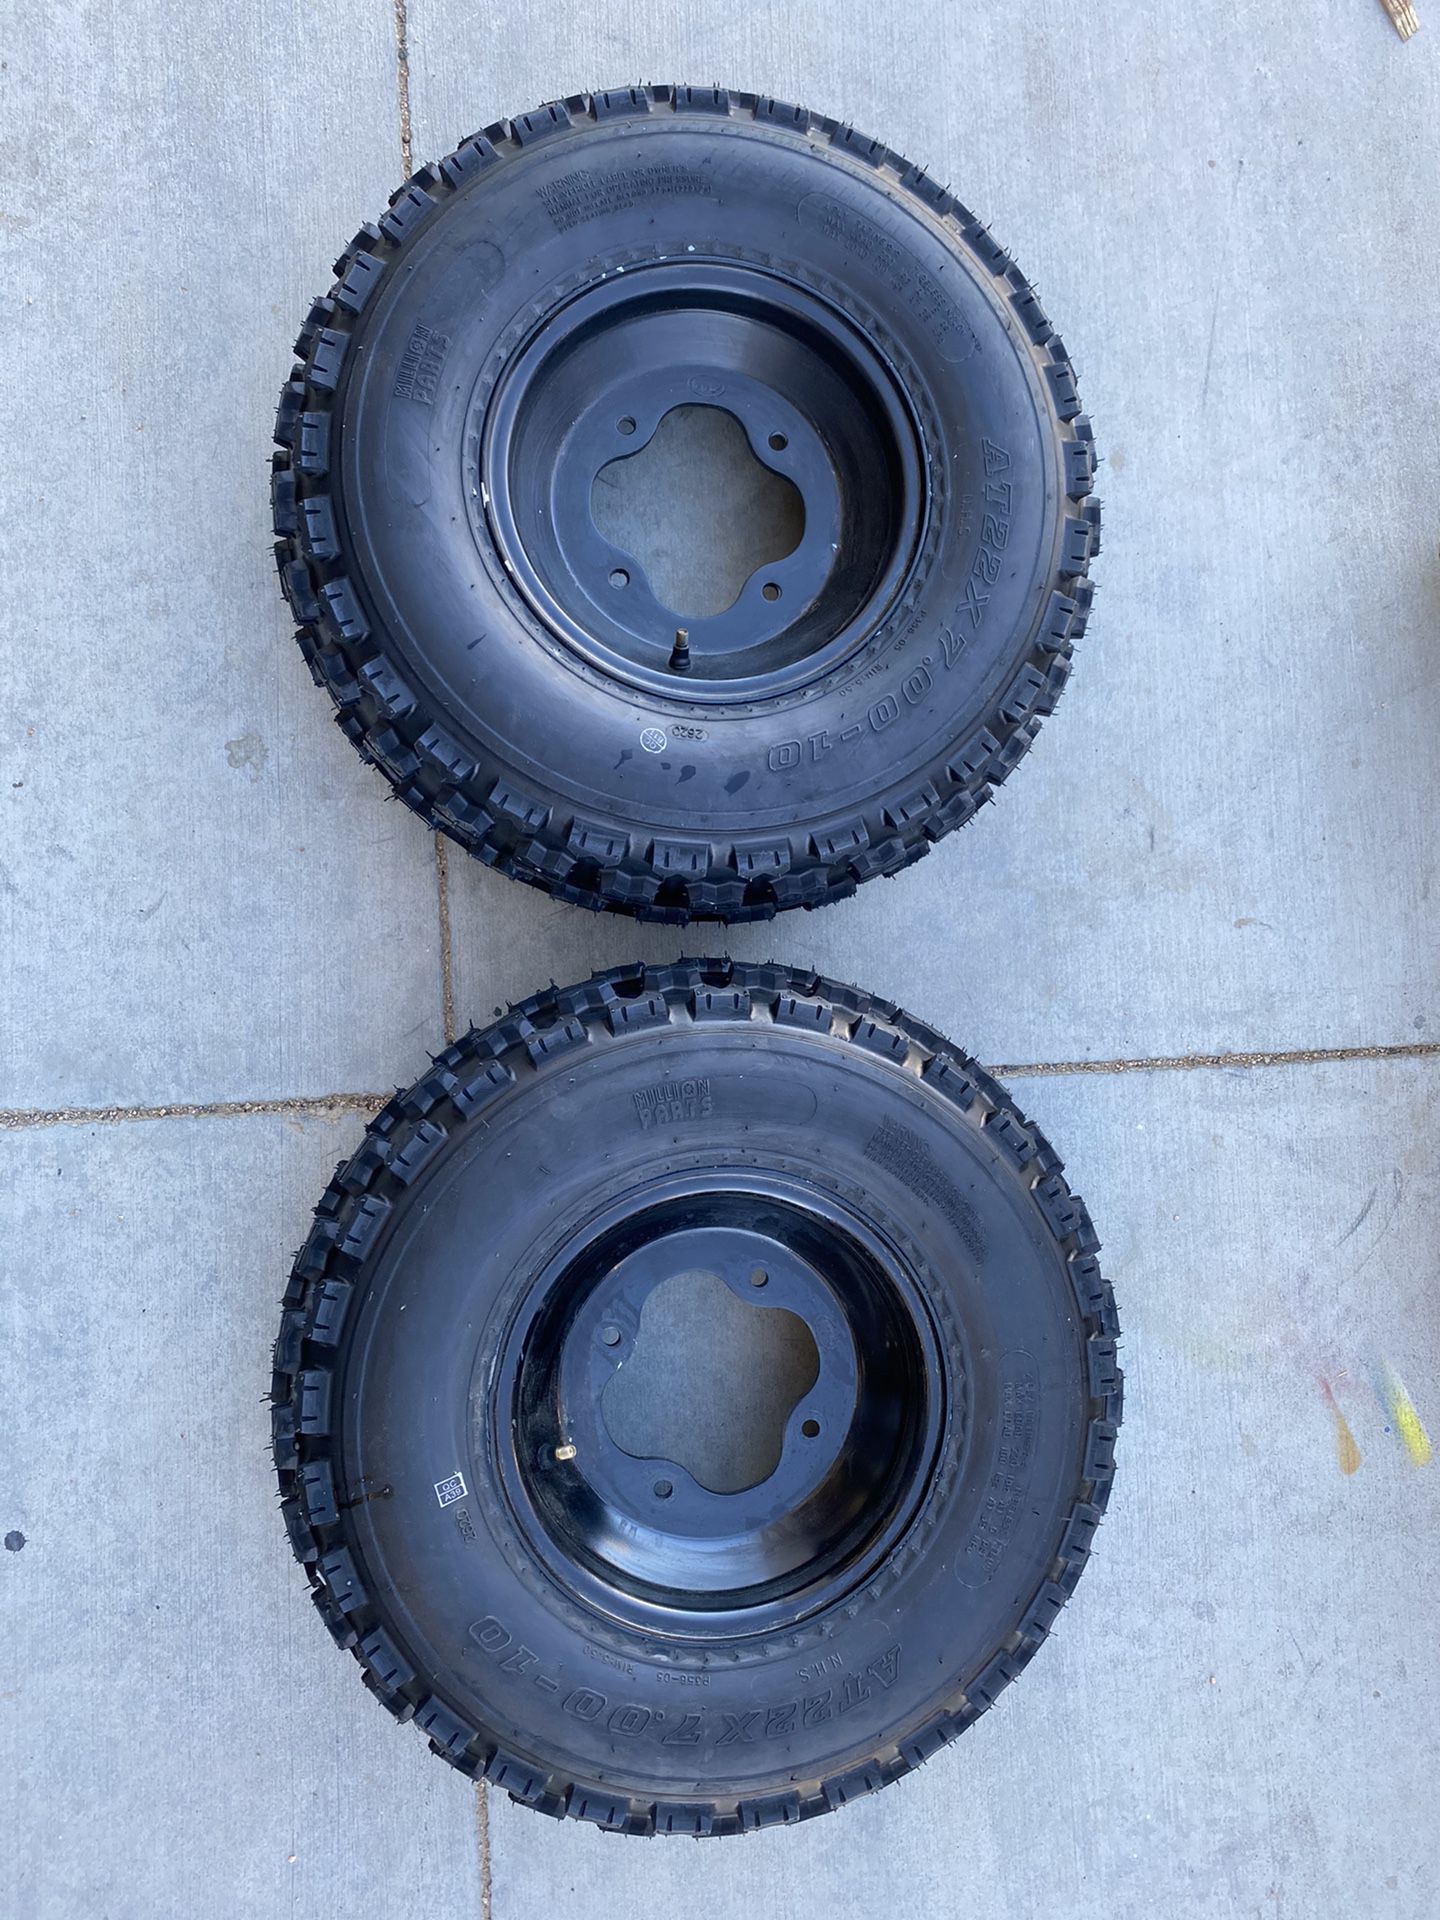 22x7-10 new front atv quad tires on ITP rims 4/144